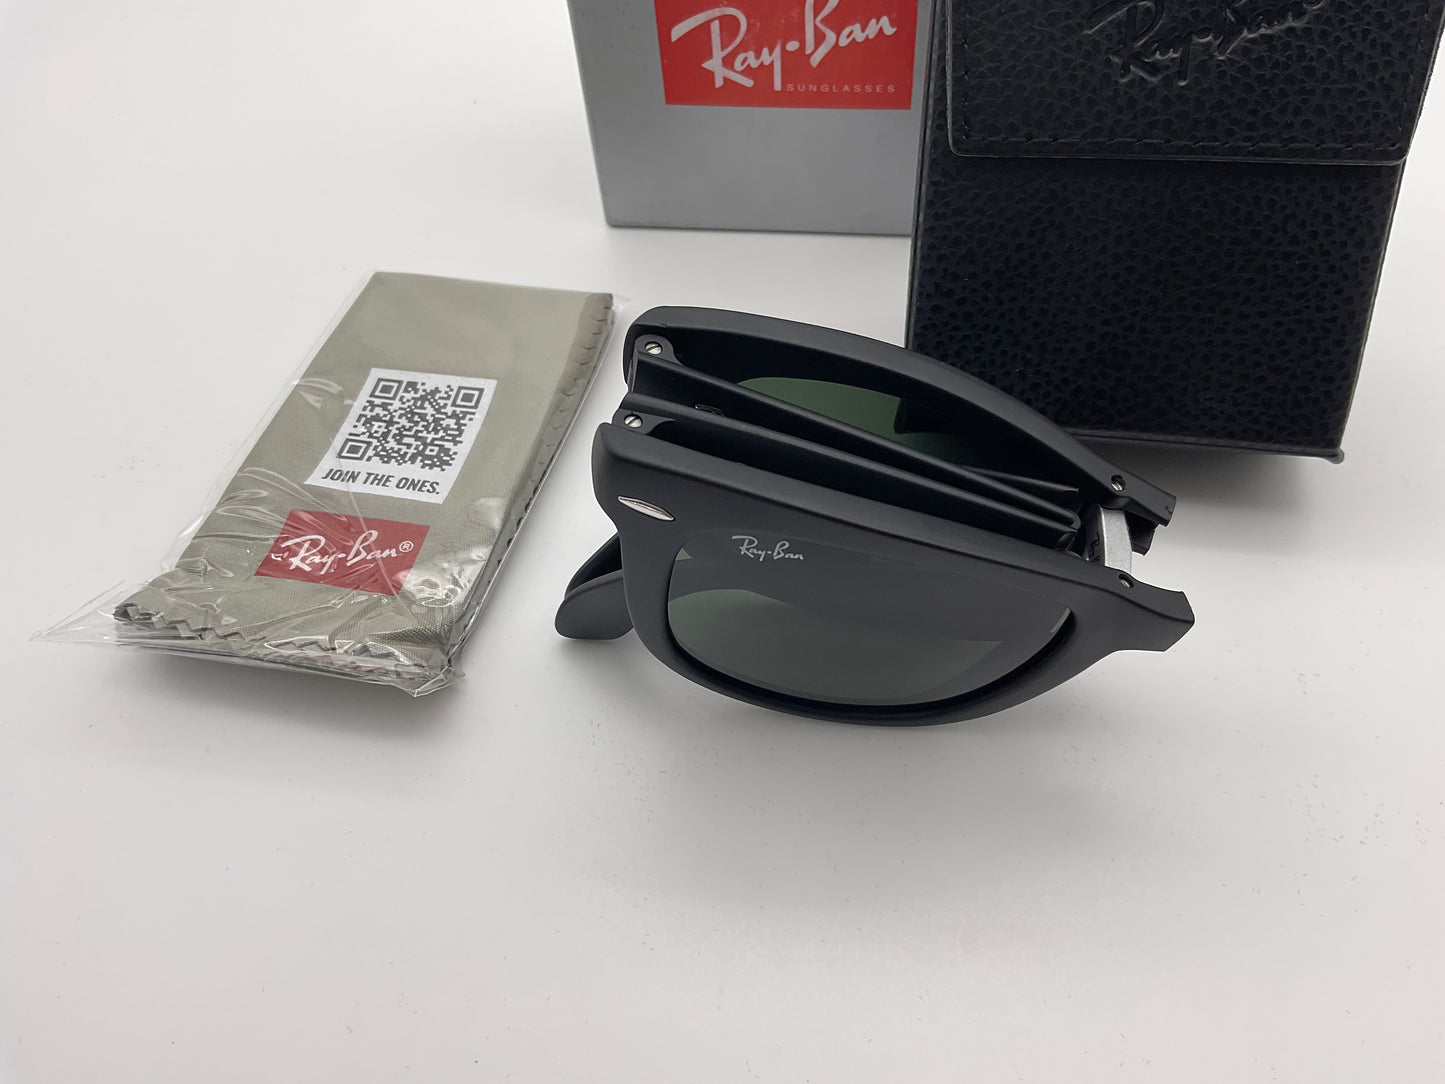 Ray-Ban Folding Wayfarer 50mm Matte Black Frame Sunglasses RB4105 601-s made in Italy